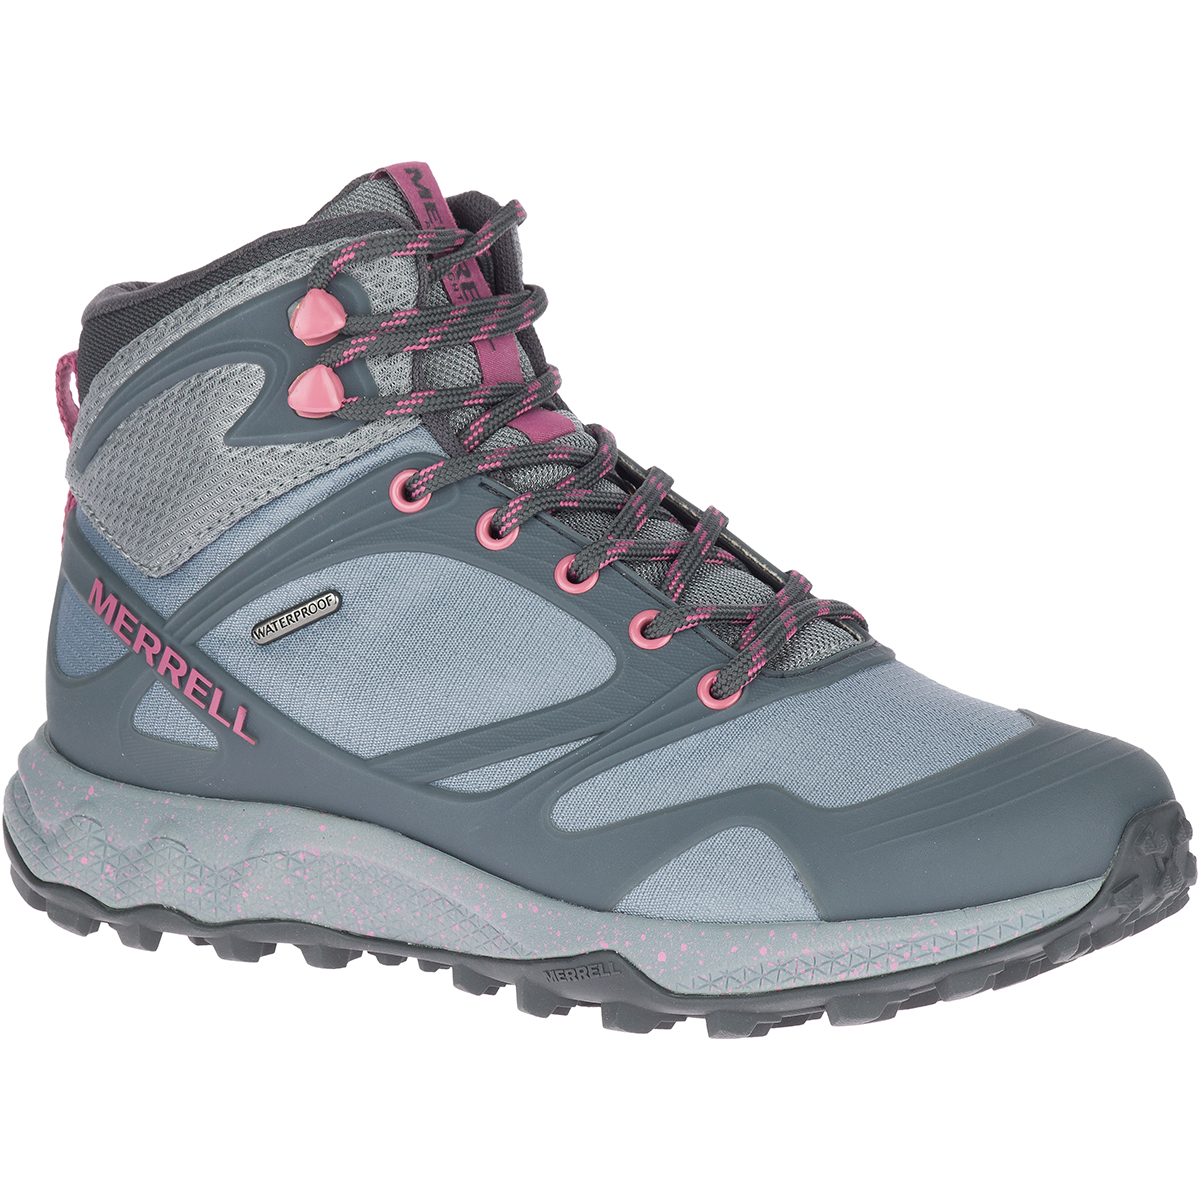 Merrell Women's Altalight Mid Waterproof Hiking Boots - Size 10